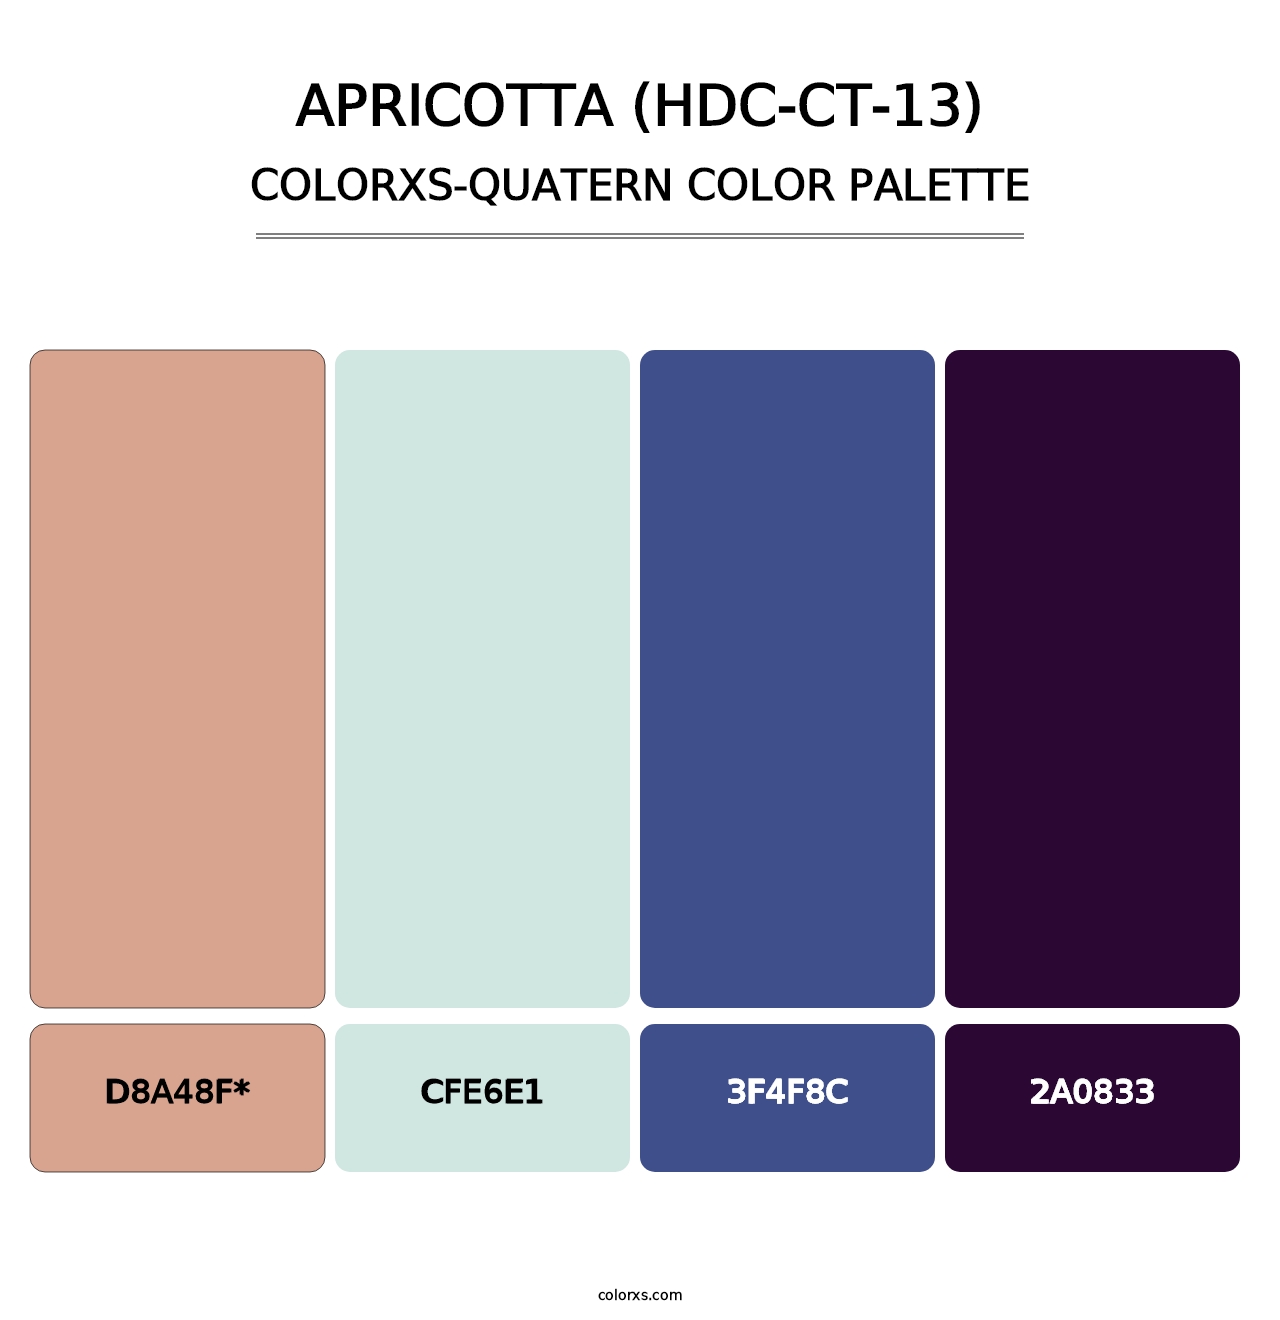 Apricotta (HDC-CT-13) - Colorxs Quatern Palette